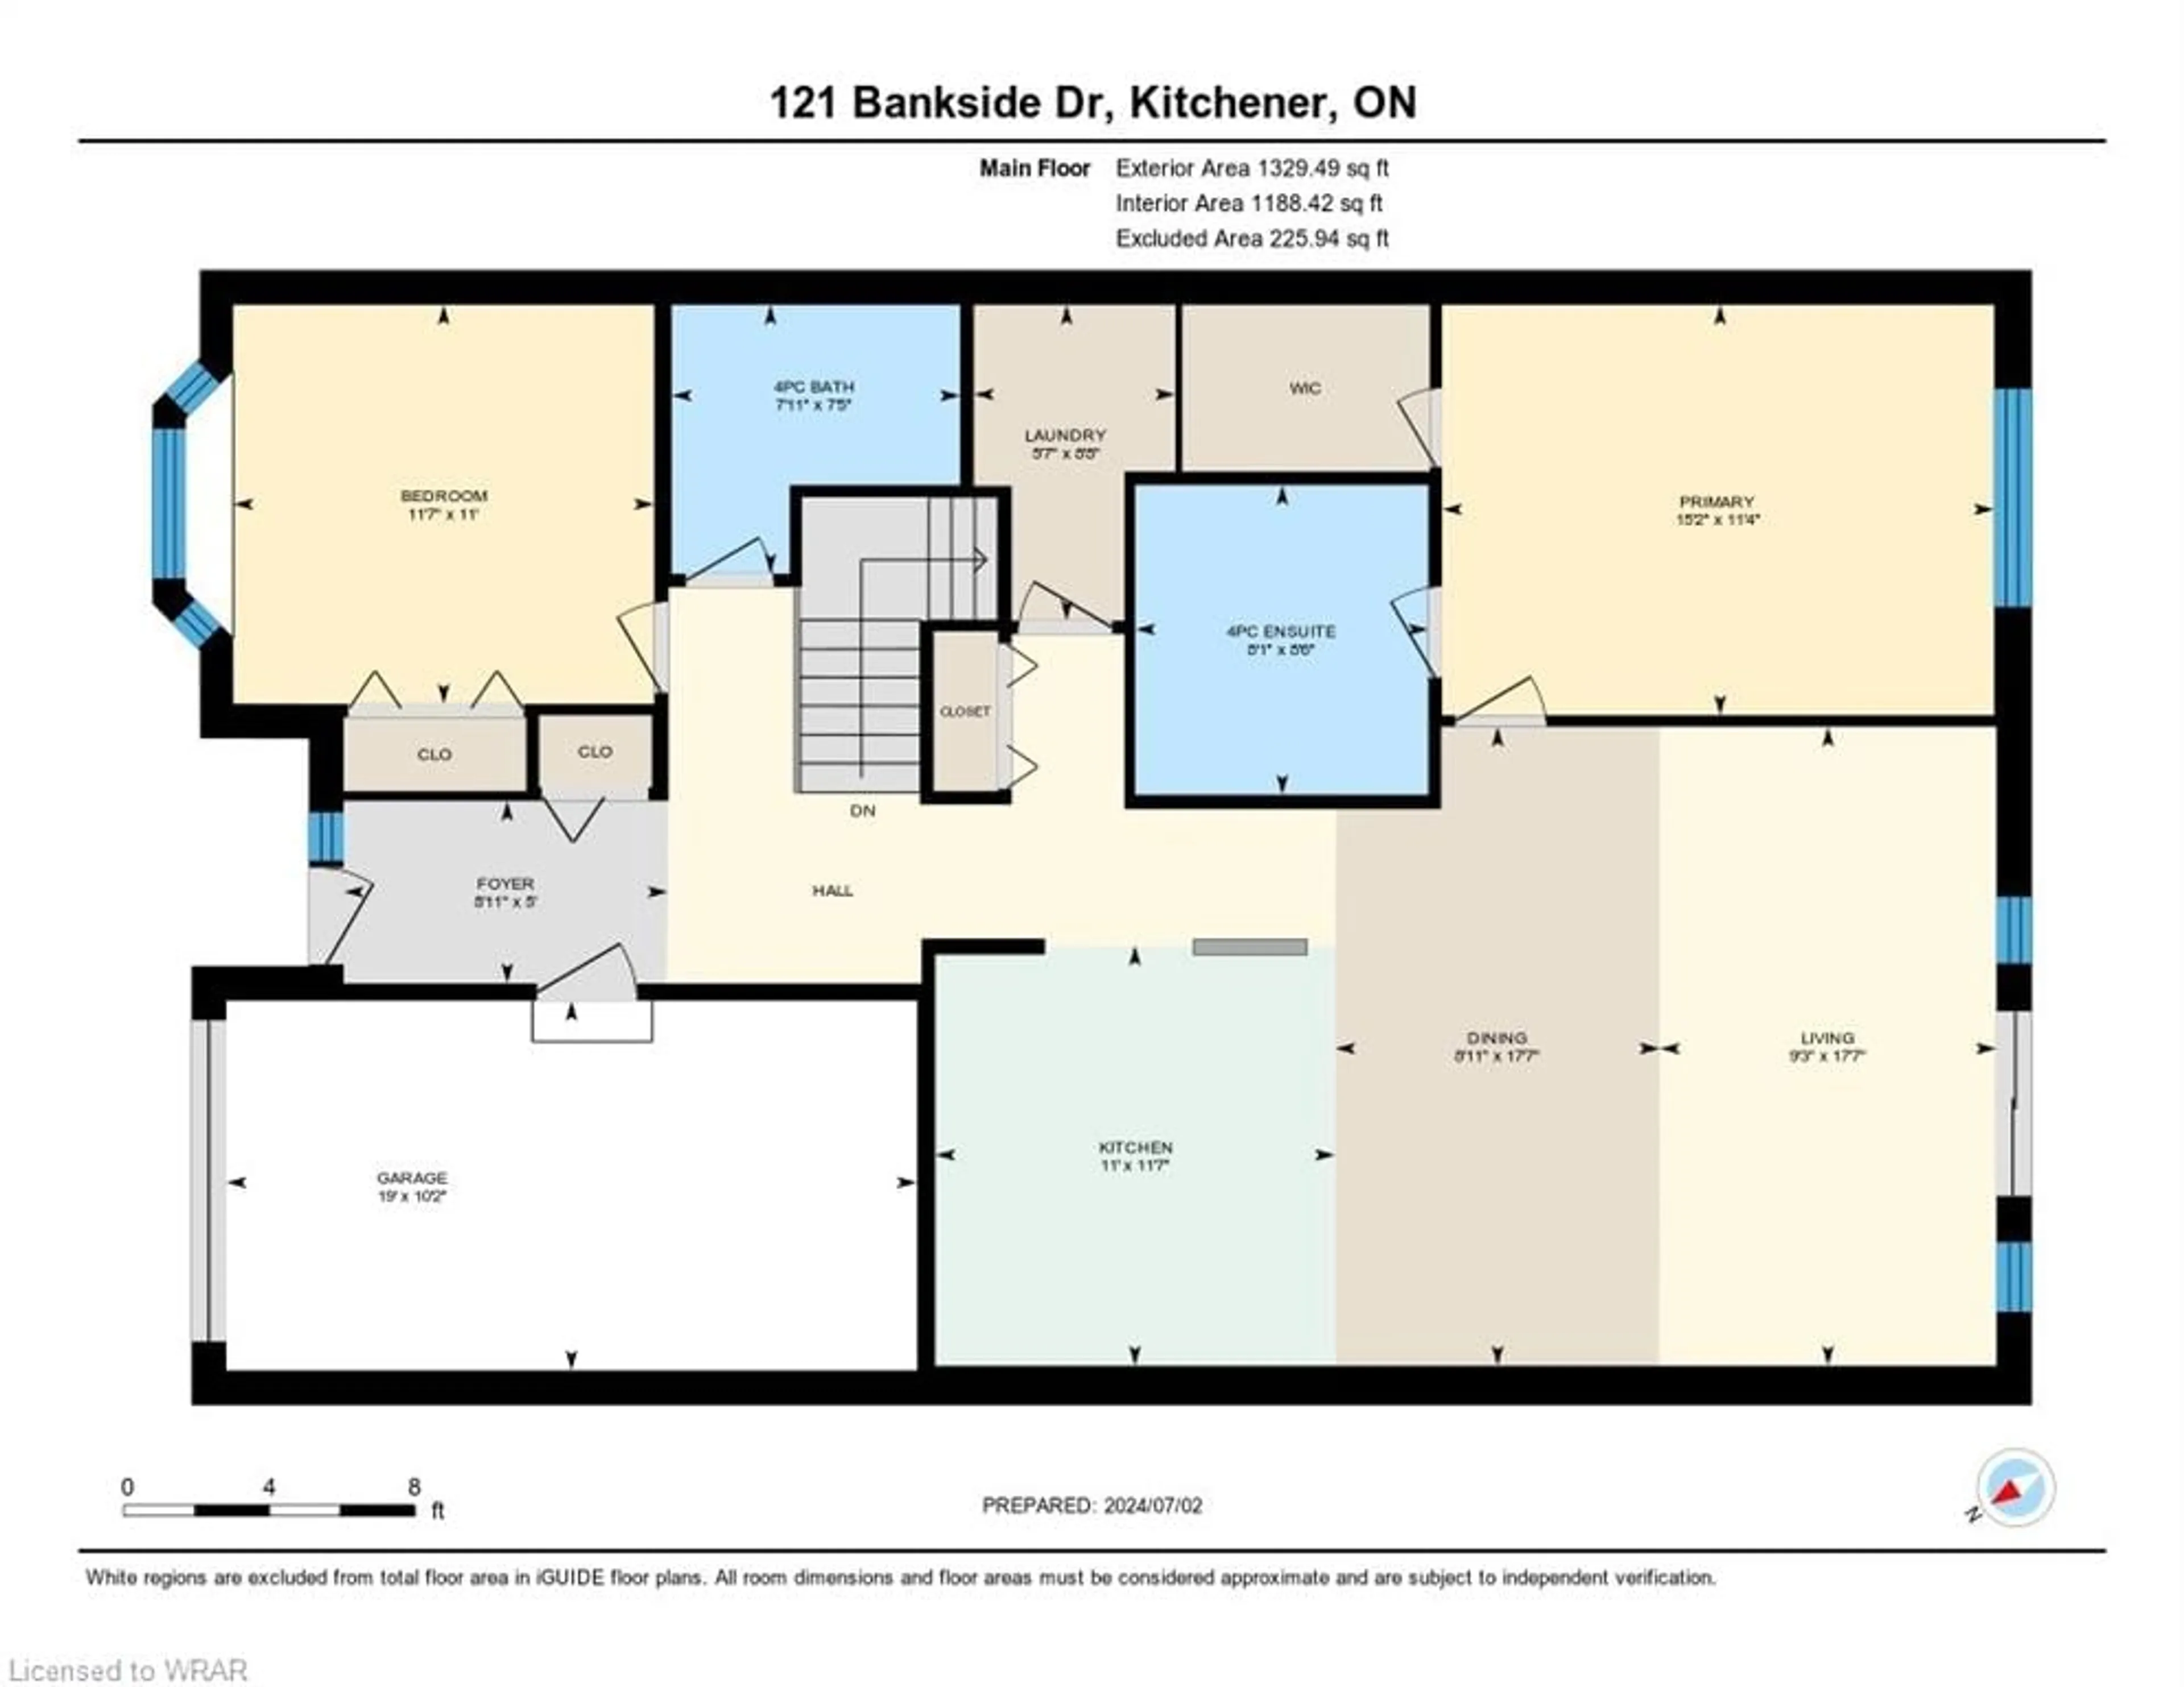 Floor plan for 121 Bankside Dr, Kitchener Ontario N2N 3G1